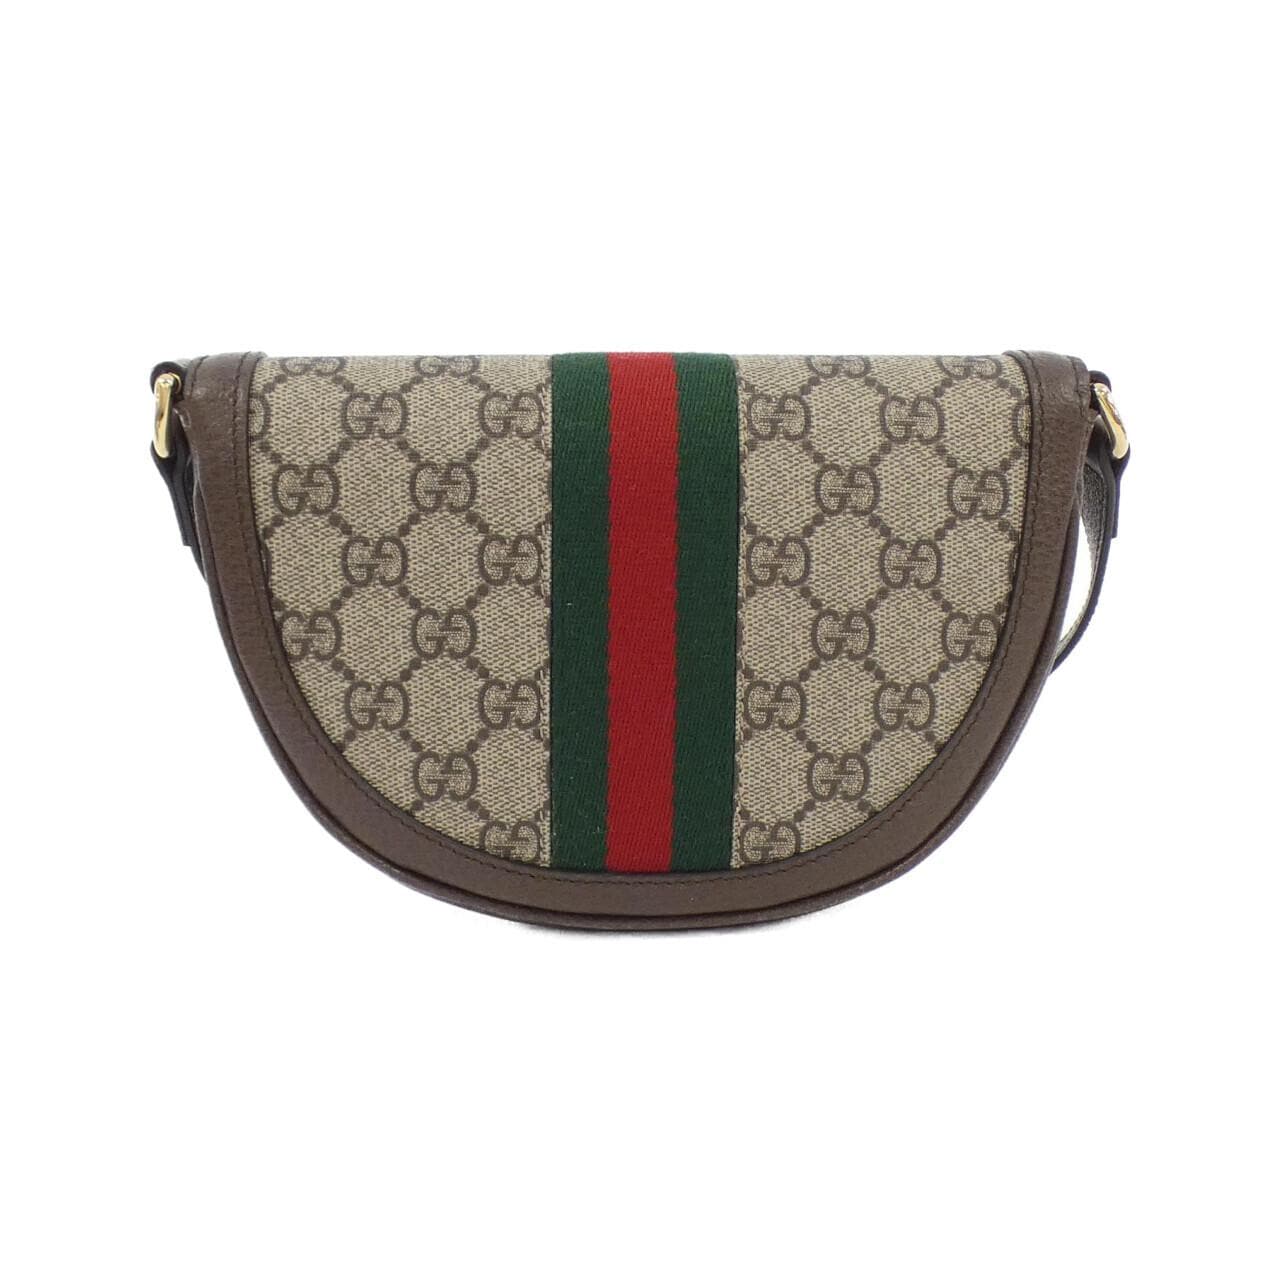 [BRAND NEW] Gucci OPHIDIA 757309 96IWG Shoulder Bag